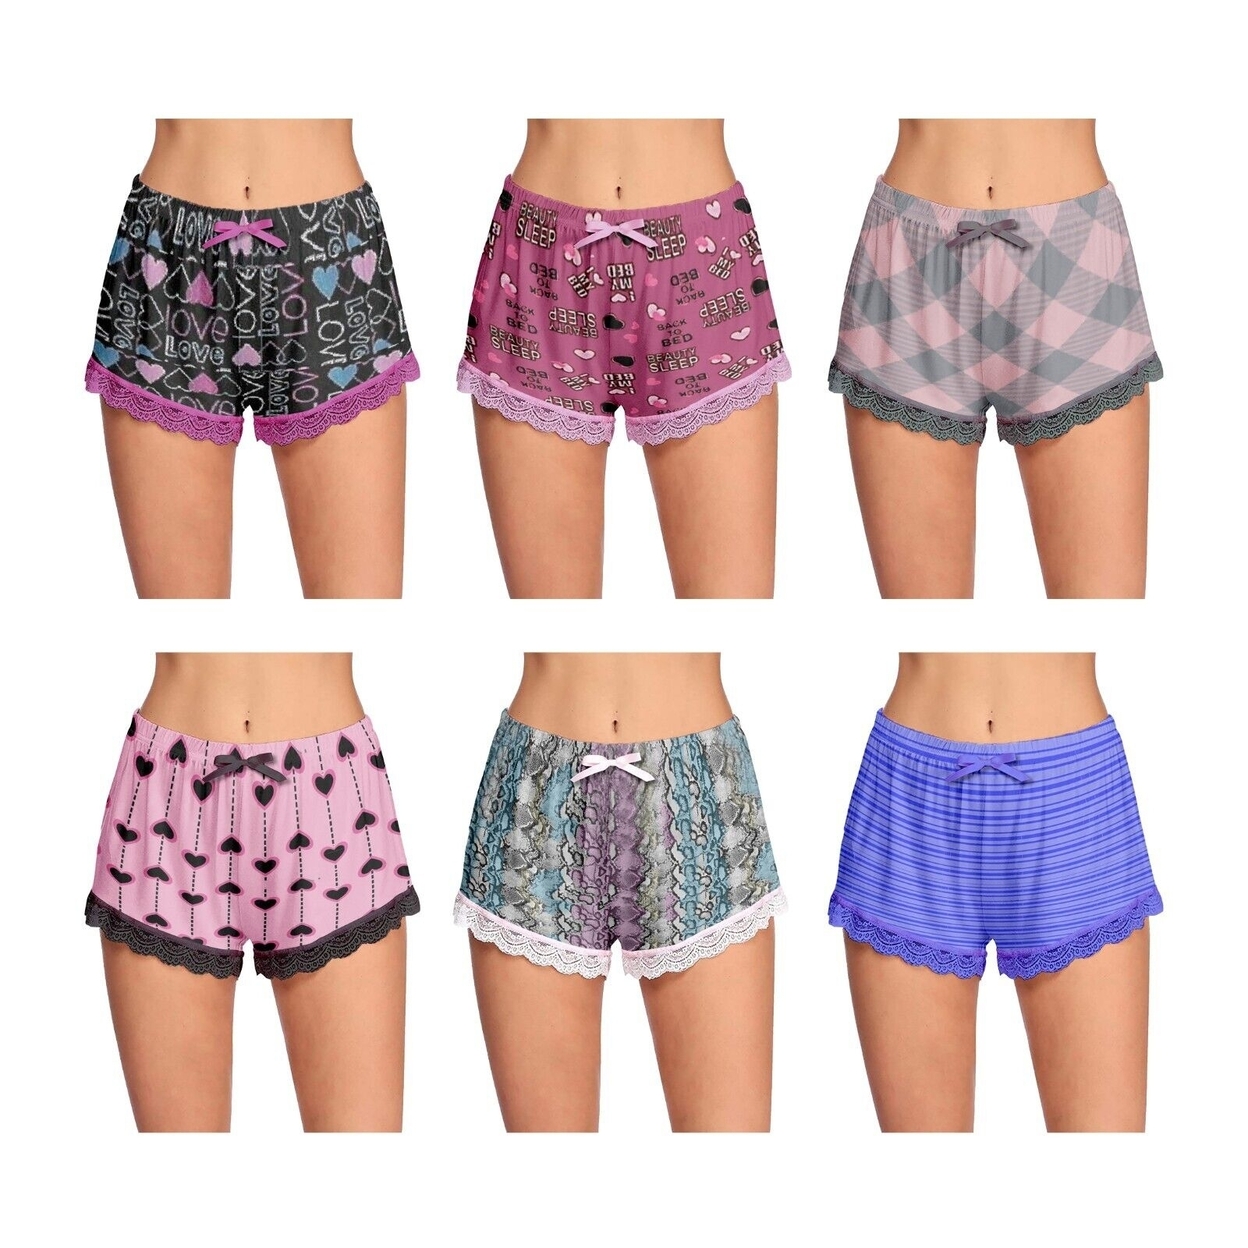 4-Pack: Women's Ultra-Soft Cozy Fun Printed Lace Trim Pajama Lounge Shorts - Large, Animal